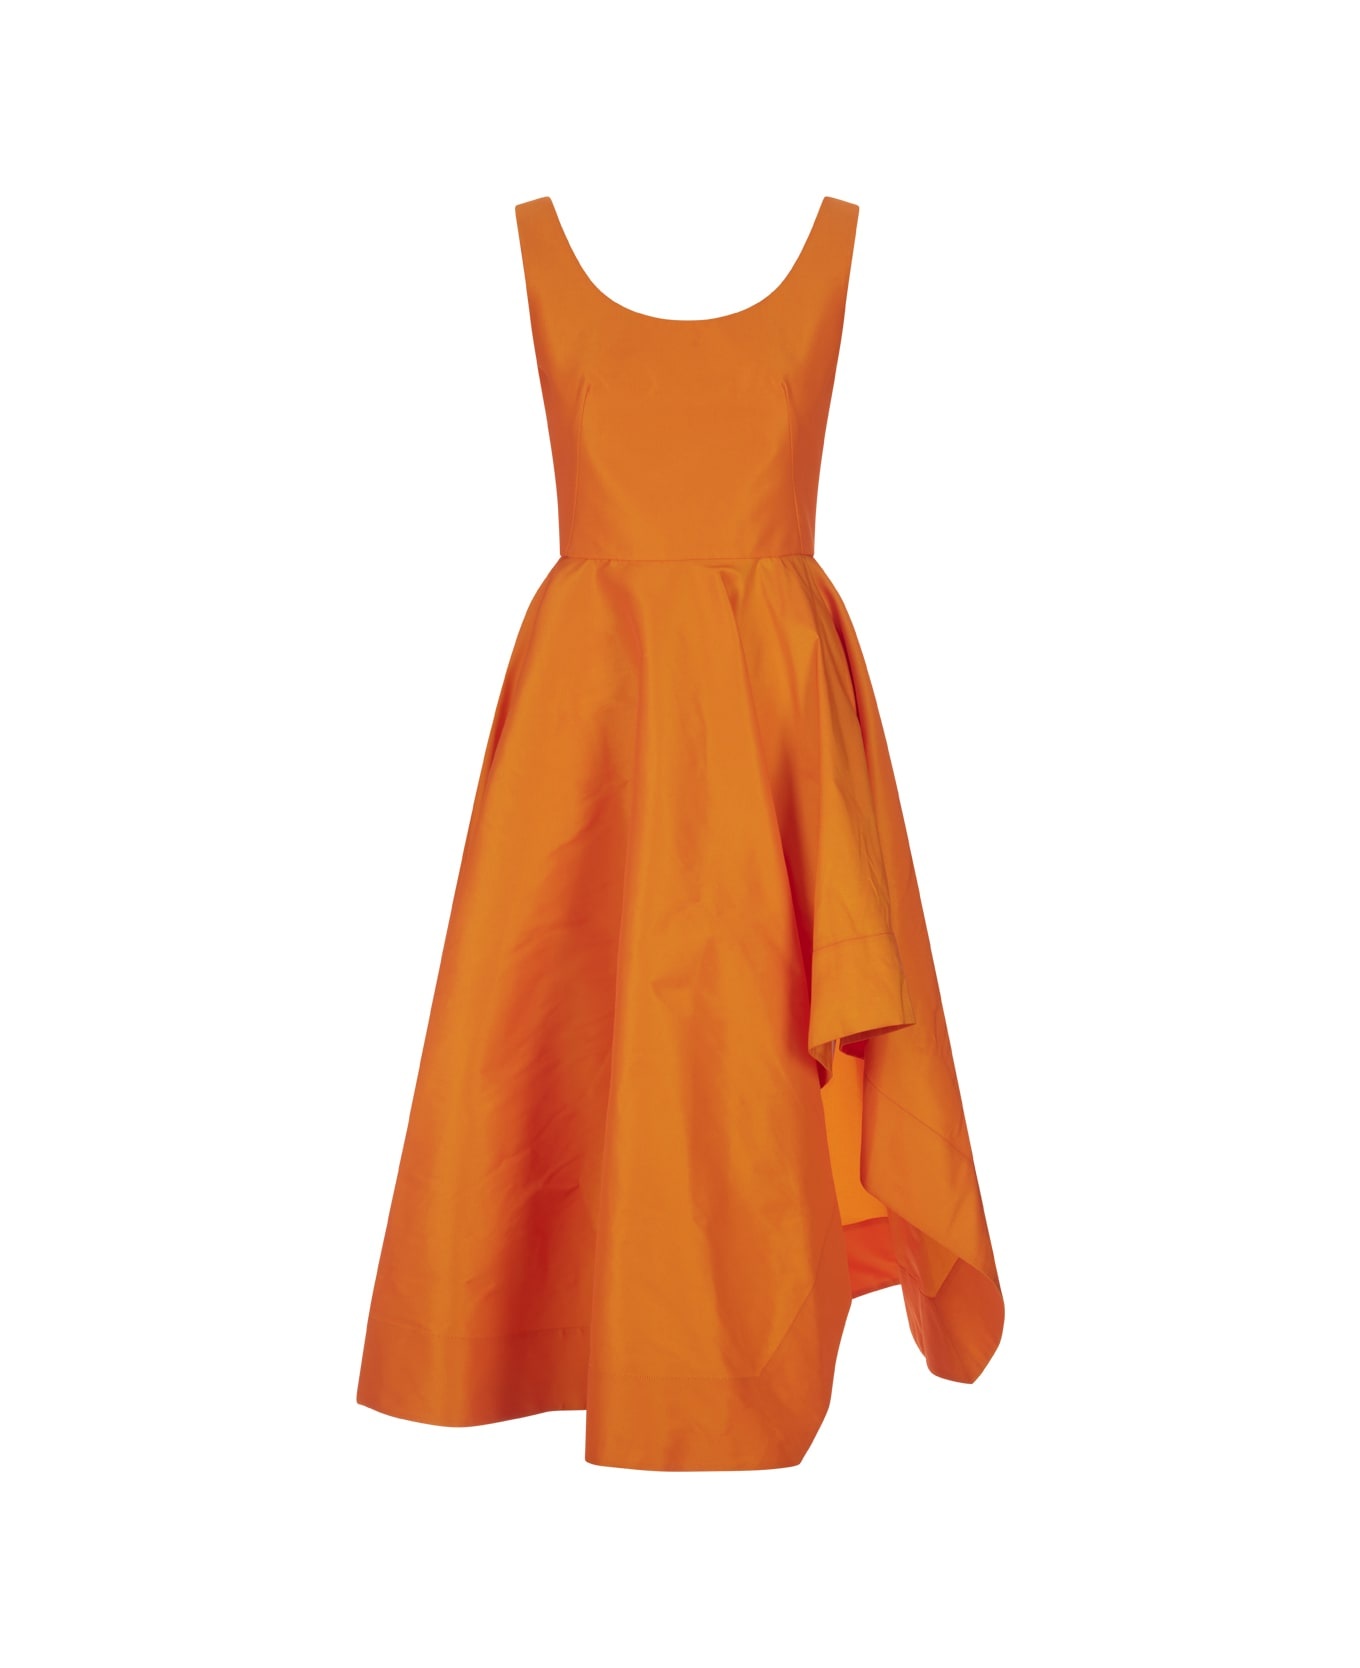 Asymmetrical And Draped Dress In Orange - 1